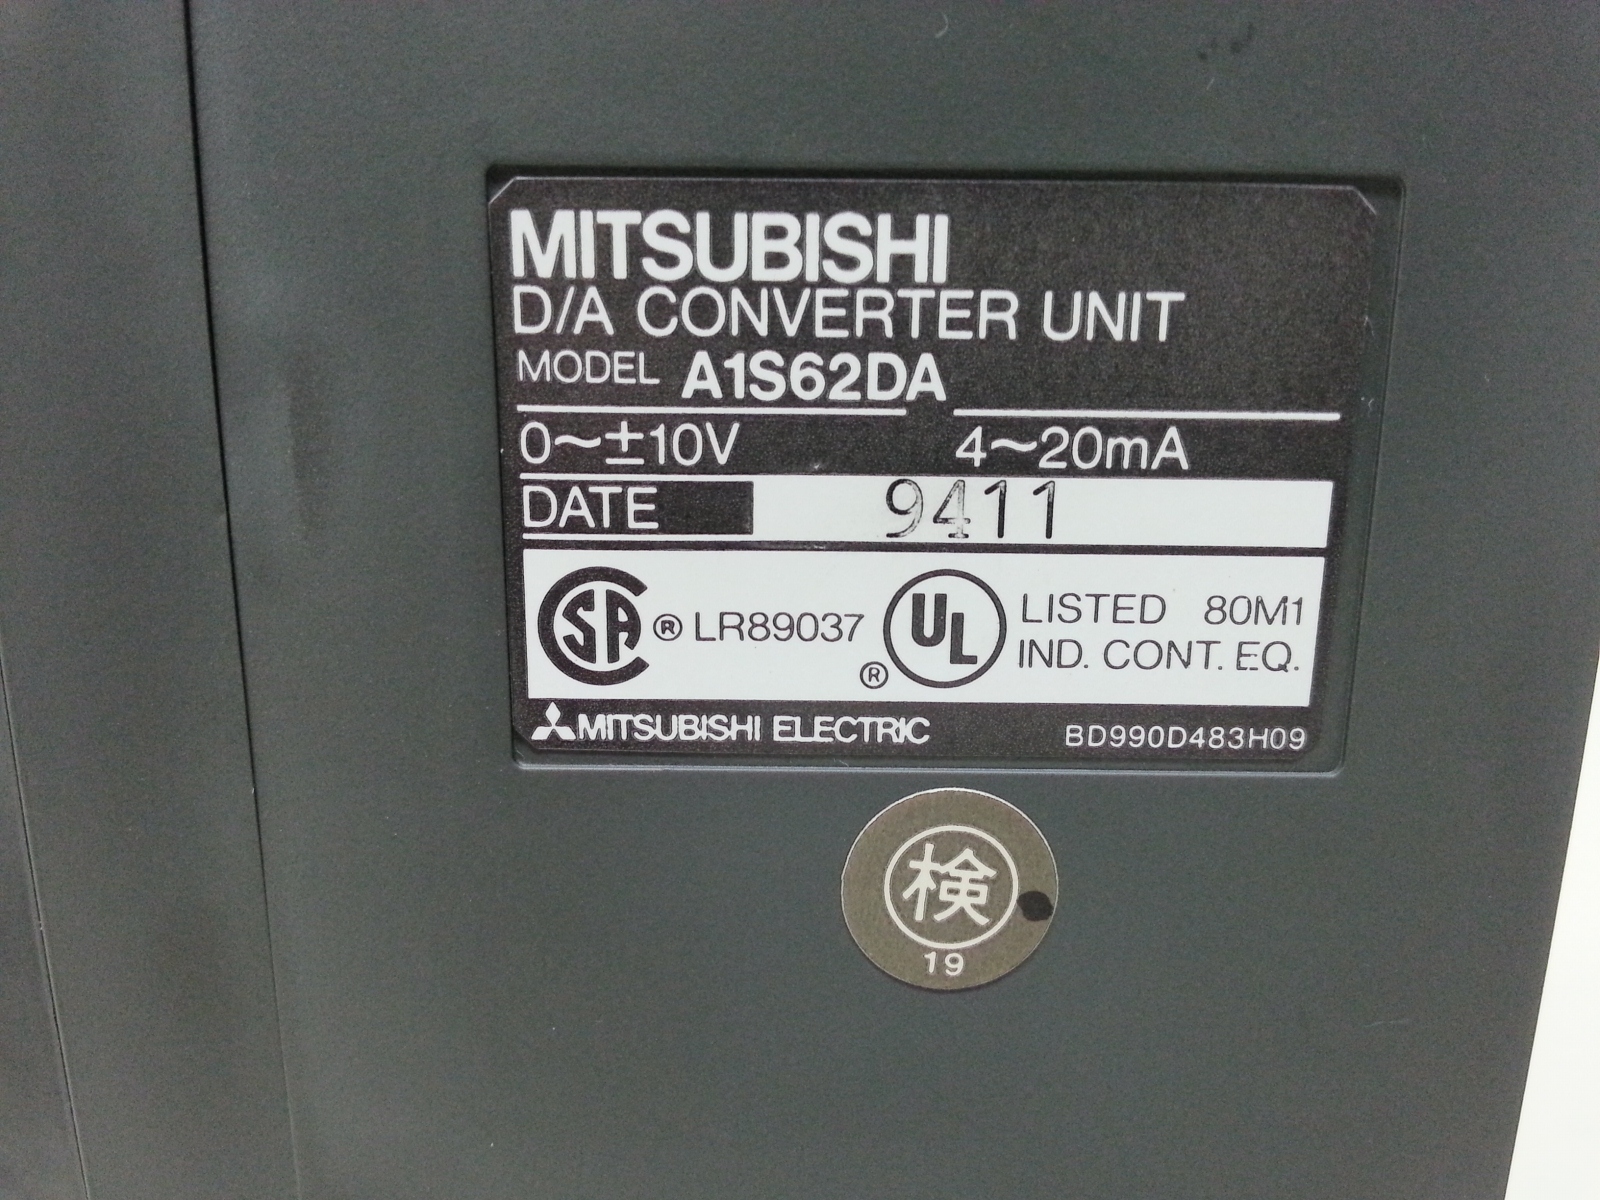 A1S62DA Melsec mitsubishi DA Converter unit